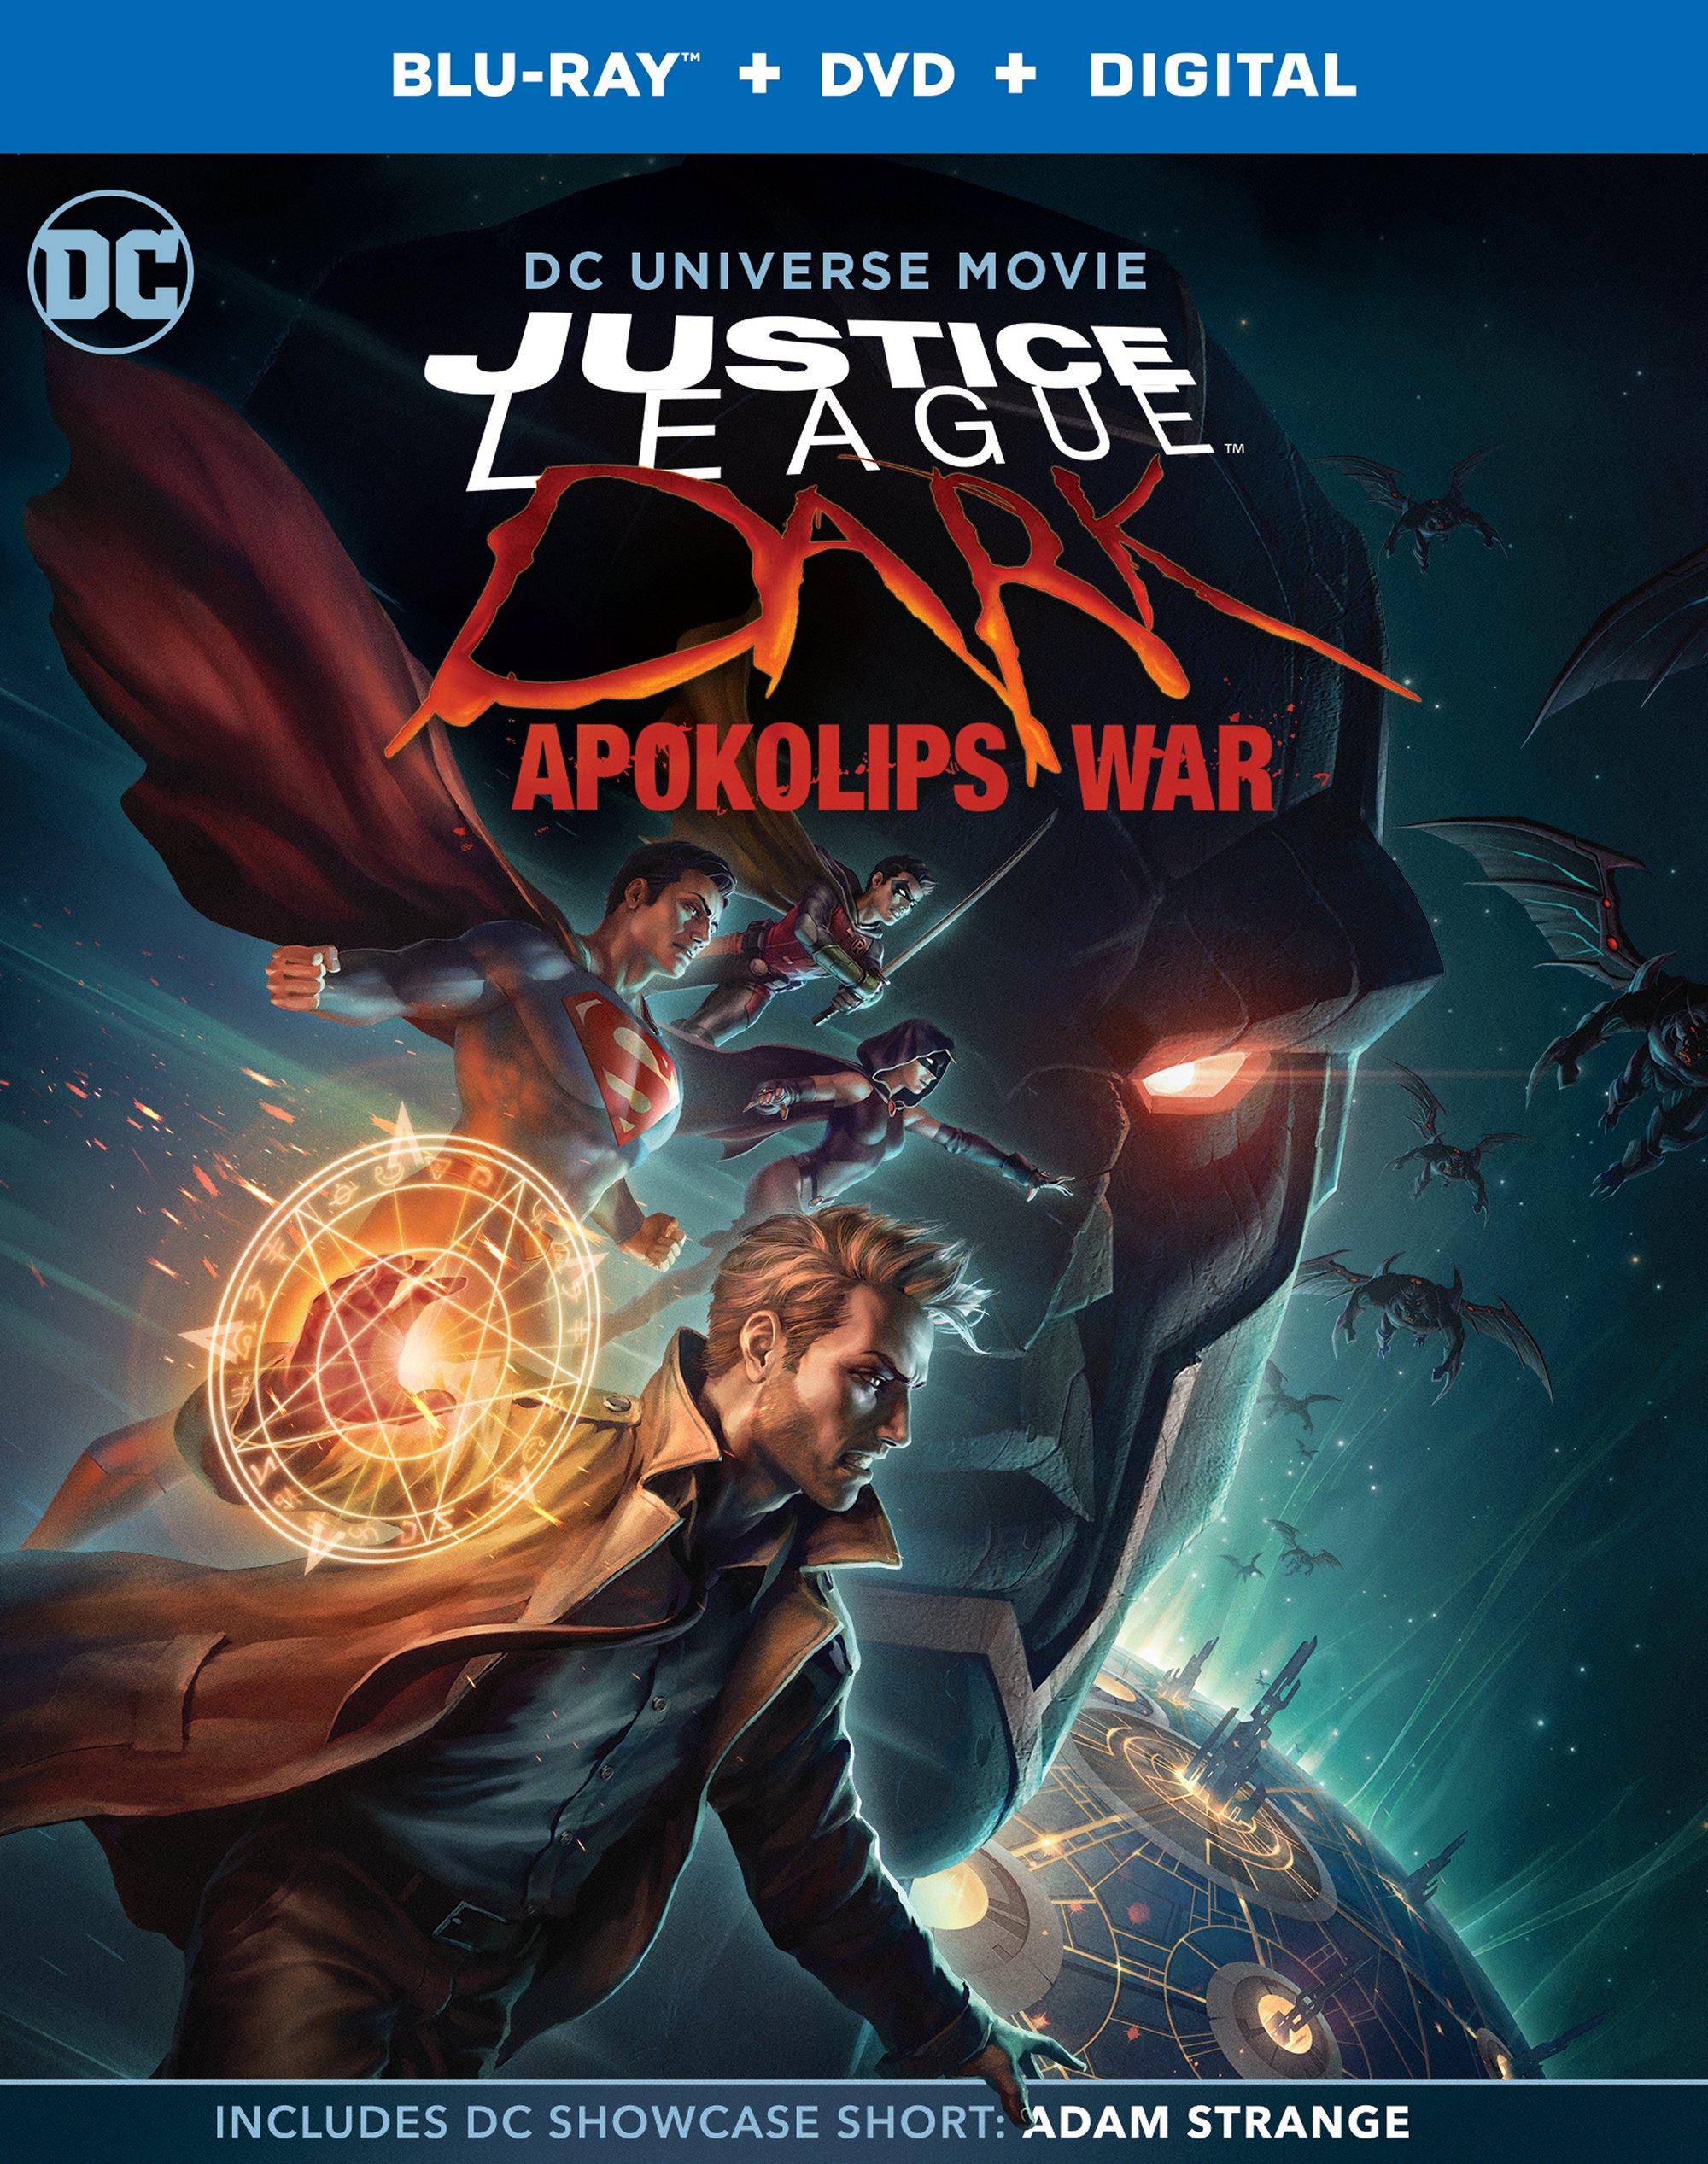 Justice League Dark: Apokolips War [Includes Digital Copy] [Blu-ray/DVD] [2020]